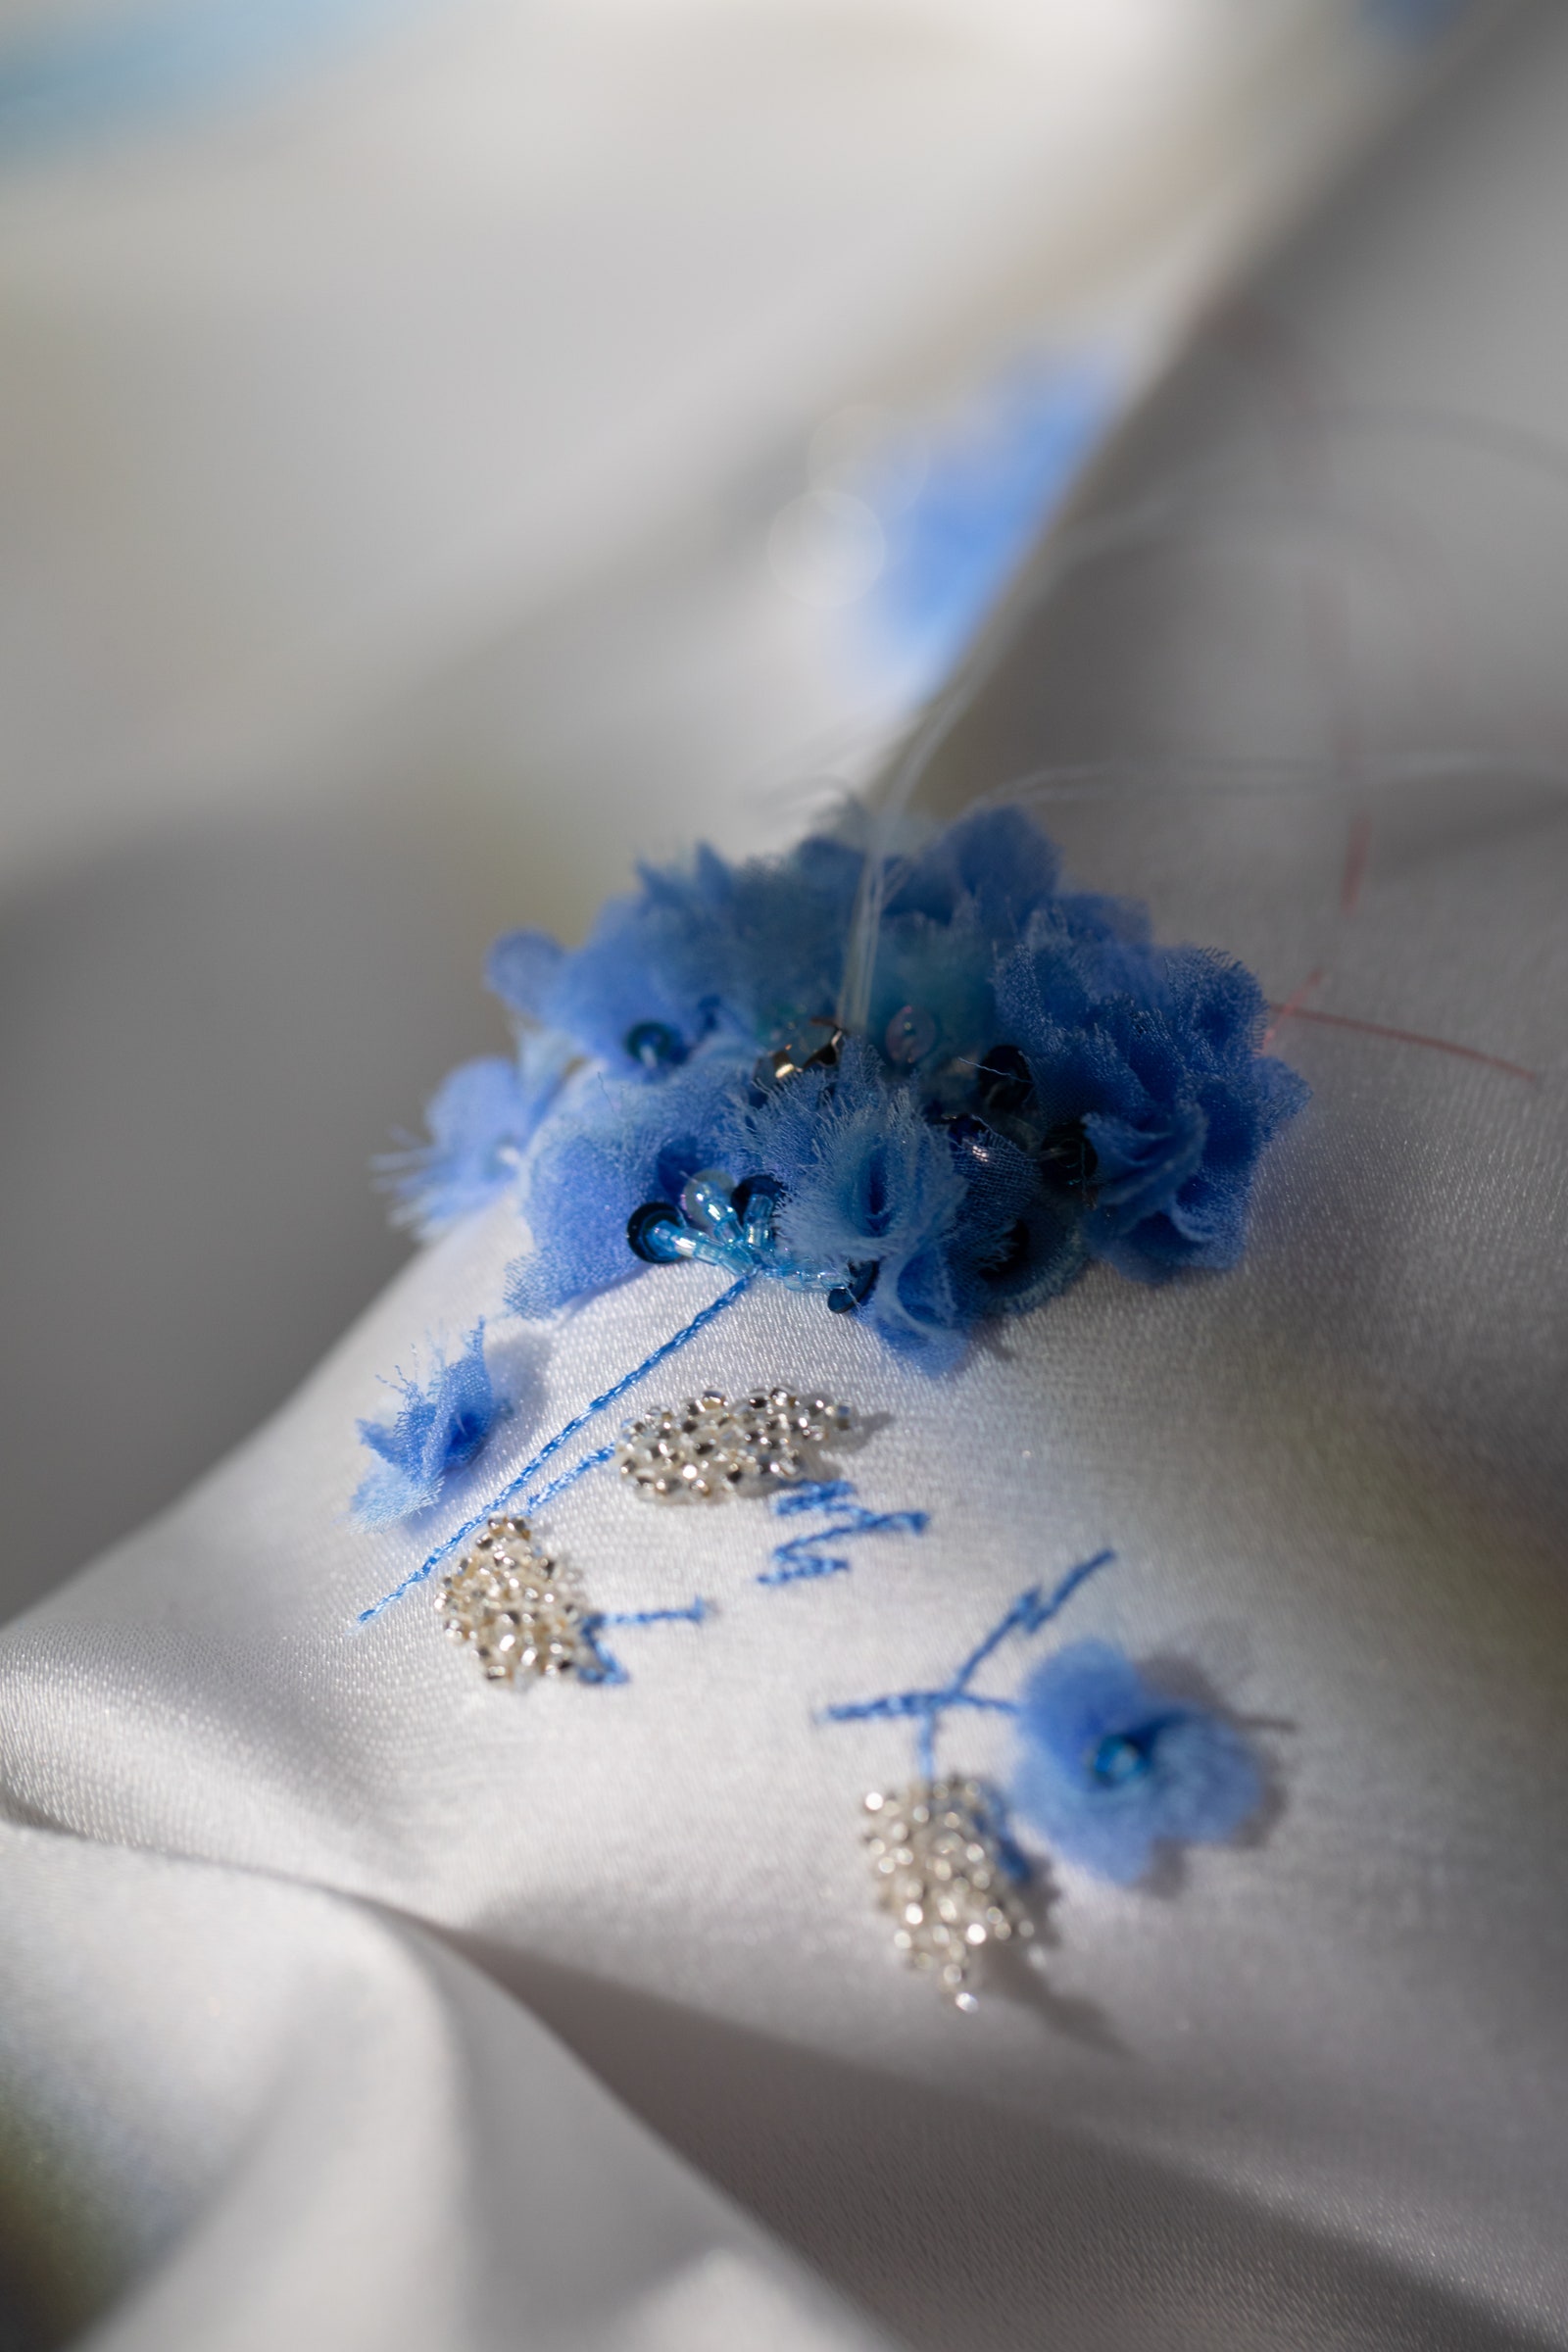 Детали из коллекции Ulyana Sergeenko Haute Couture весналето 2022